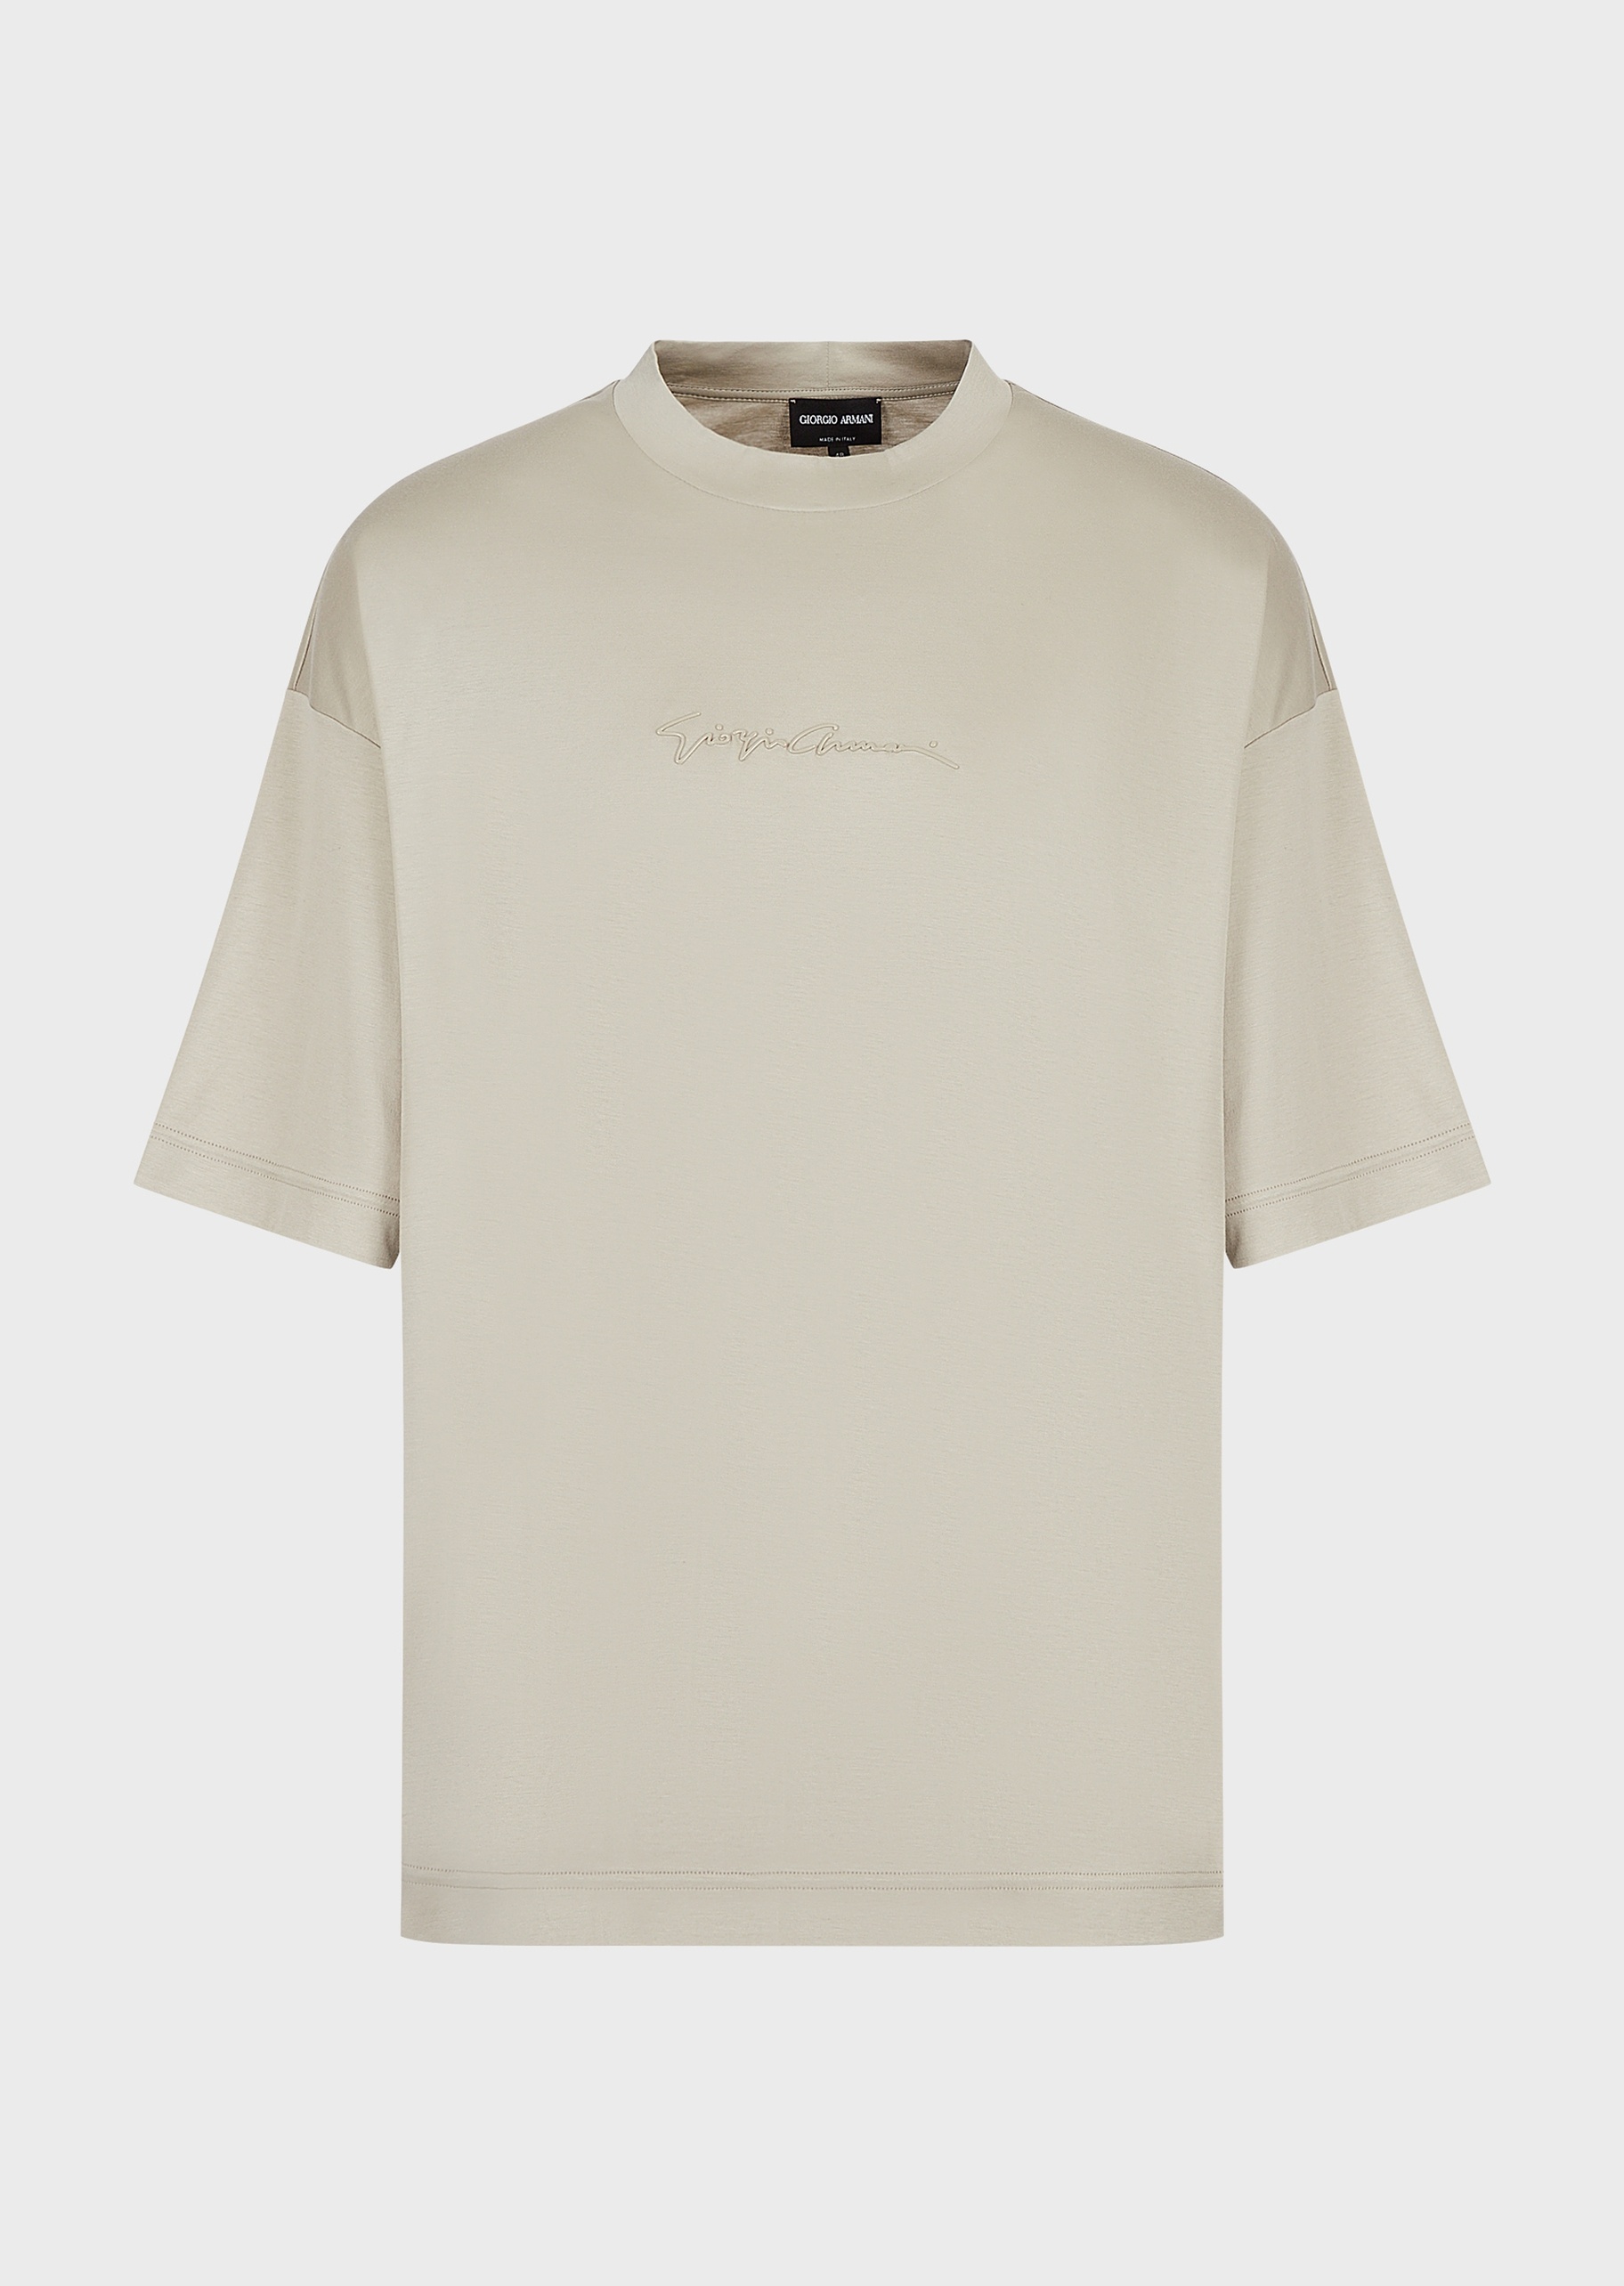 Giorgio Armani 牛仔胶囊系列T恤